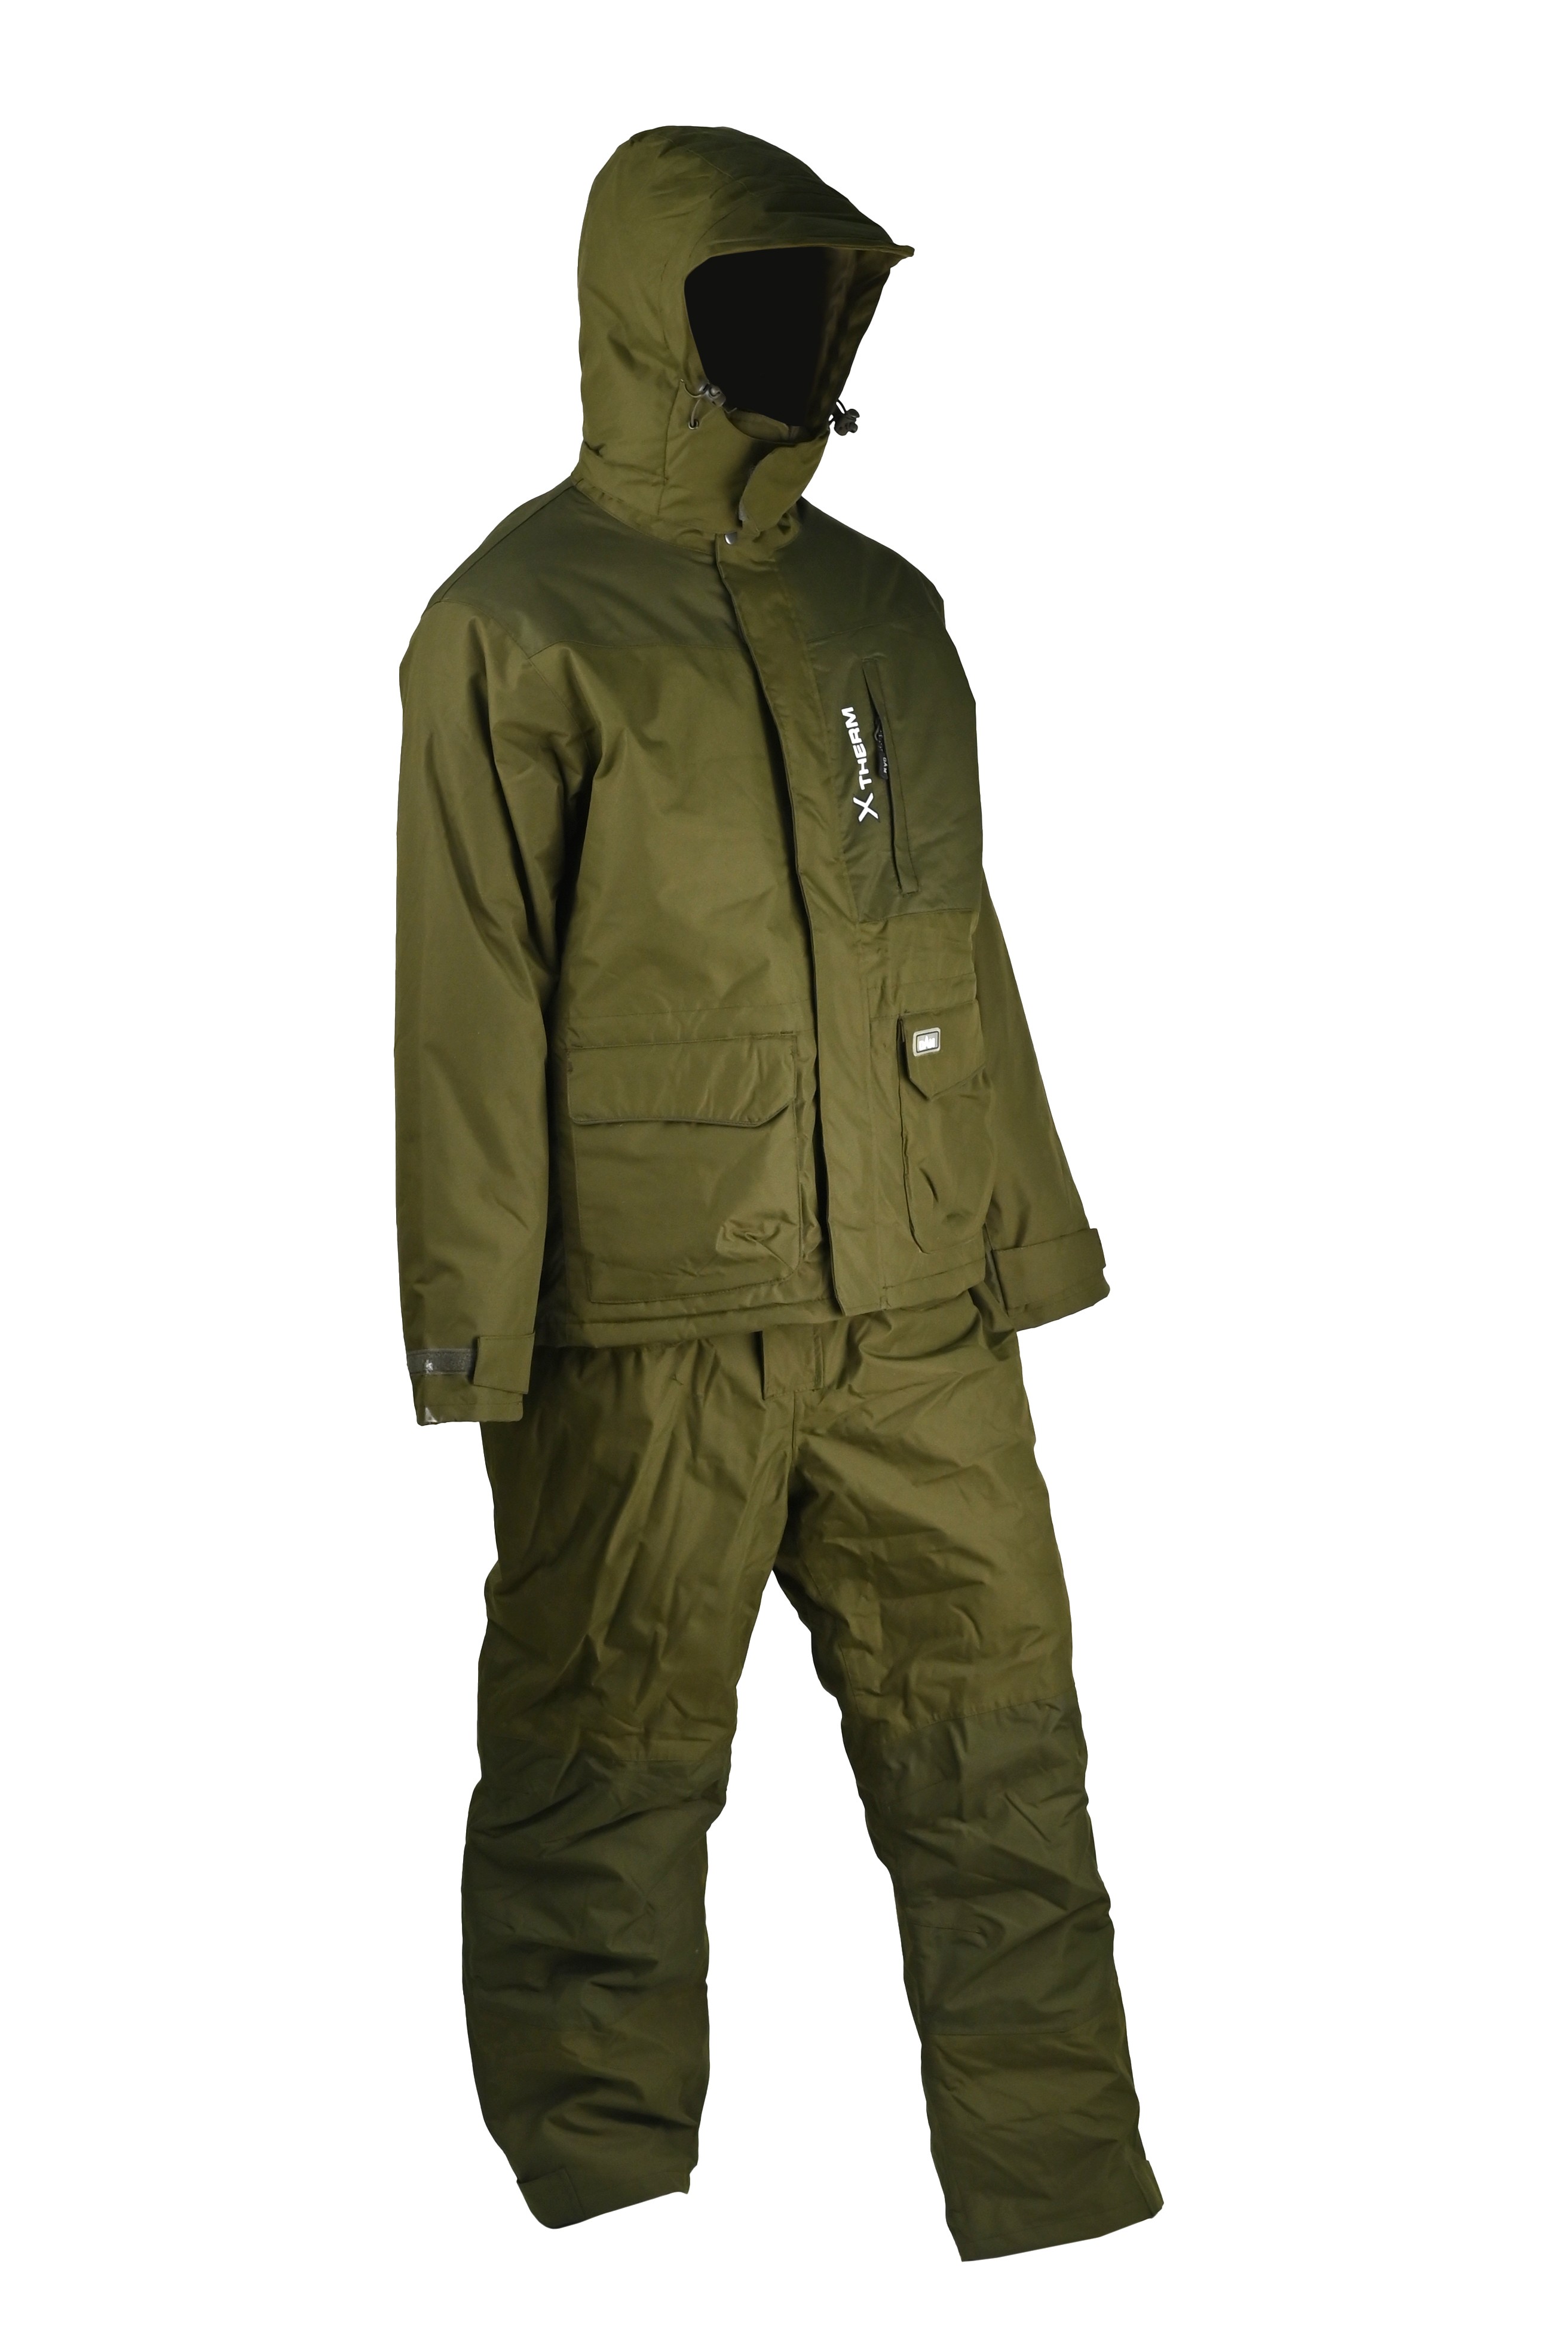 Костюм DAM Xtherm Winter Suit green  ( р.M )